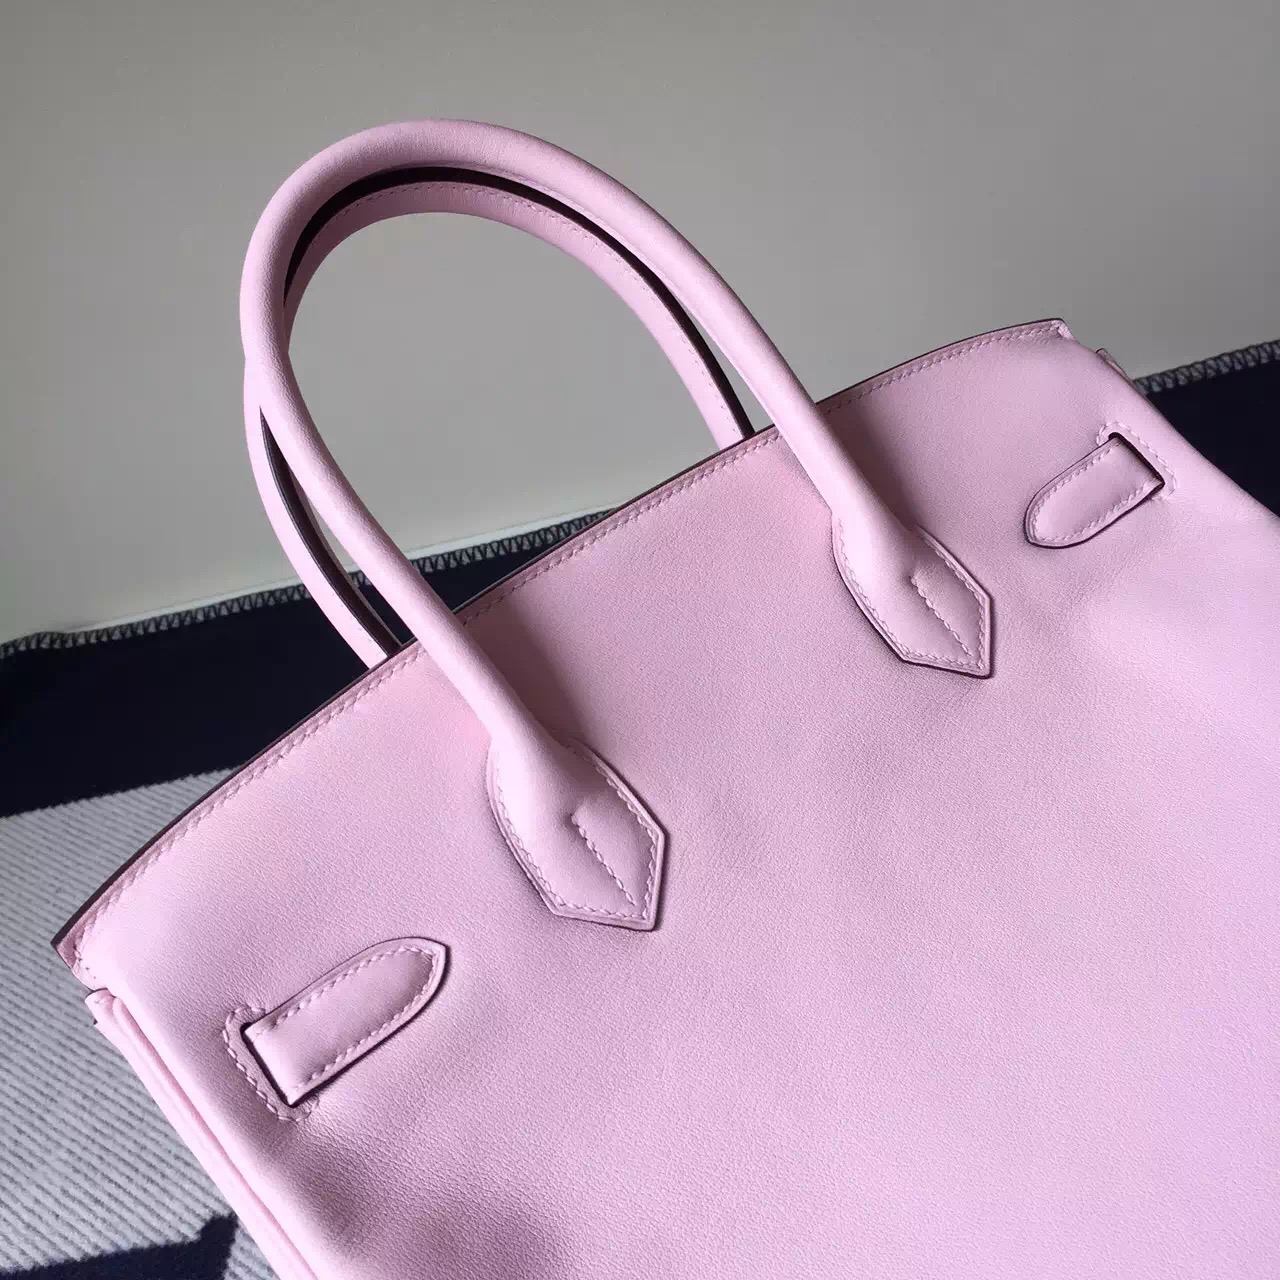 On Sale Hermes Swift Leather Birkin Bag30cm in 3Q New Rose Sakura